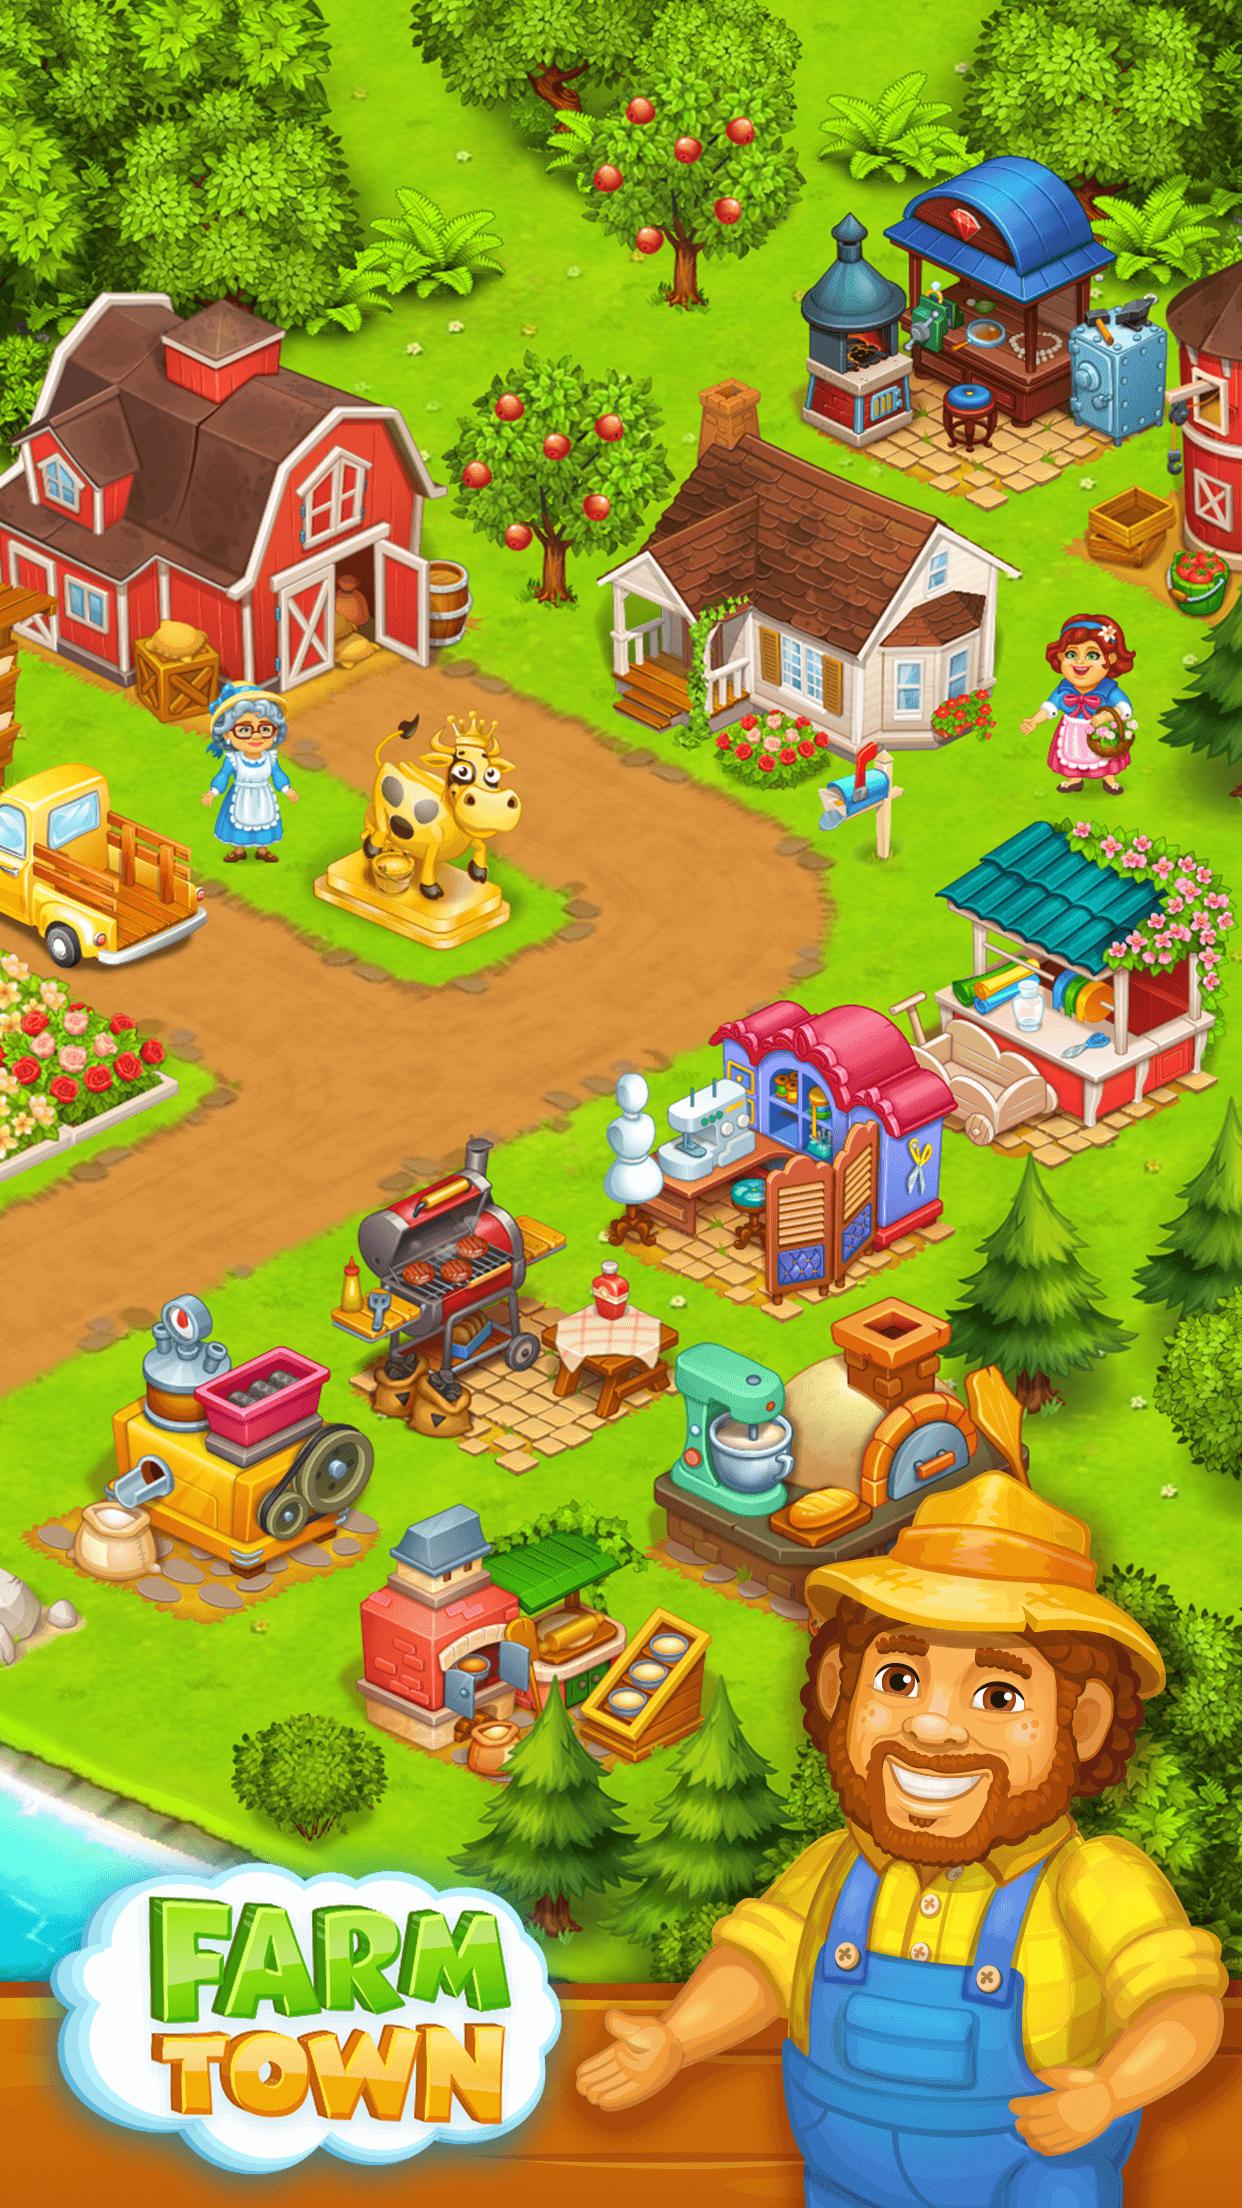 Farm Town Happy farming Day & food farm game City 3.41 Screenshot 10